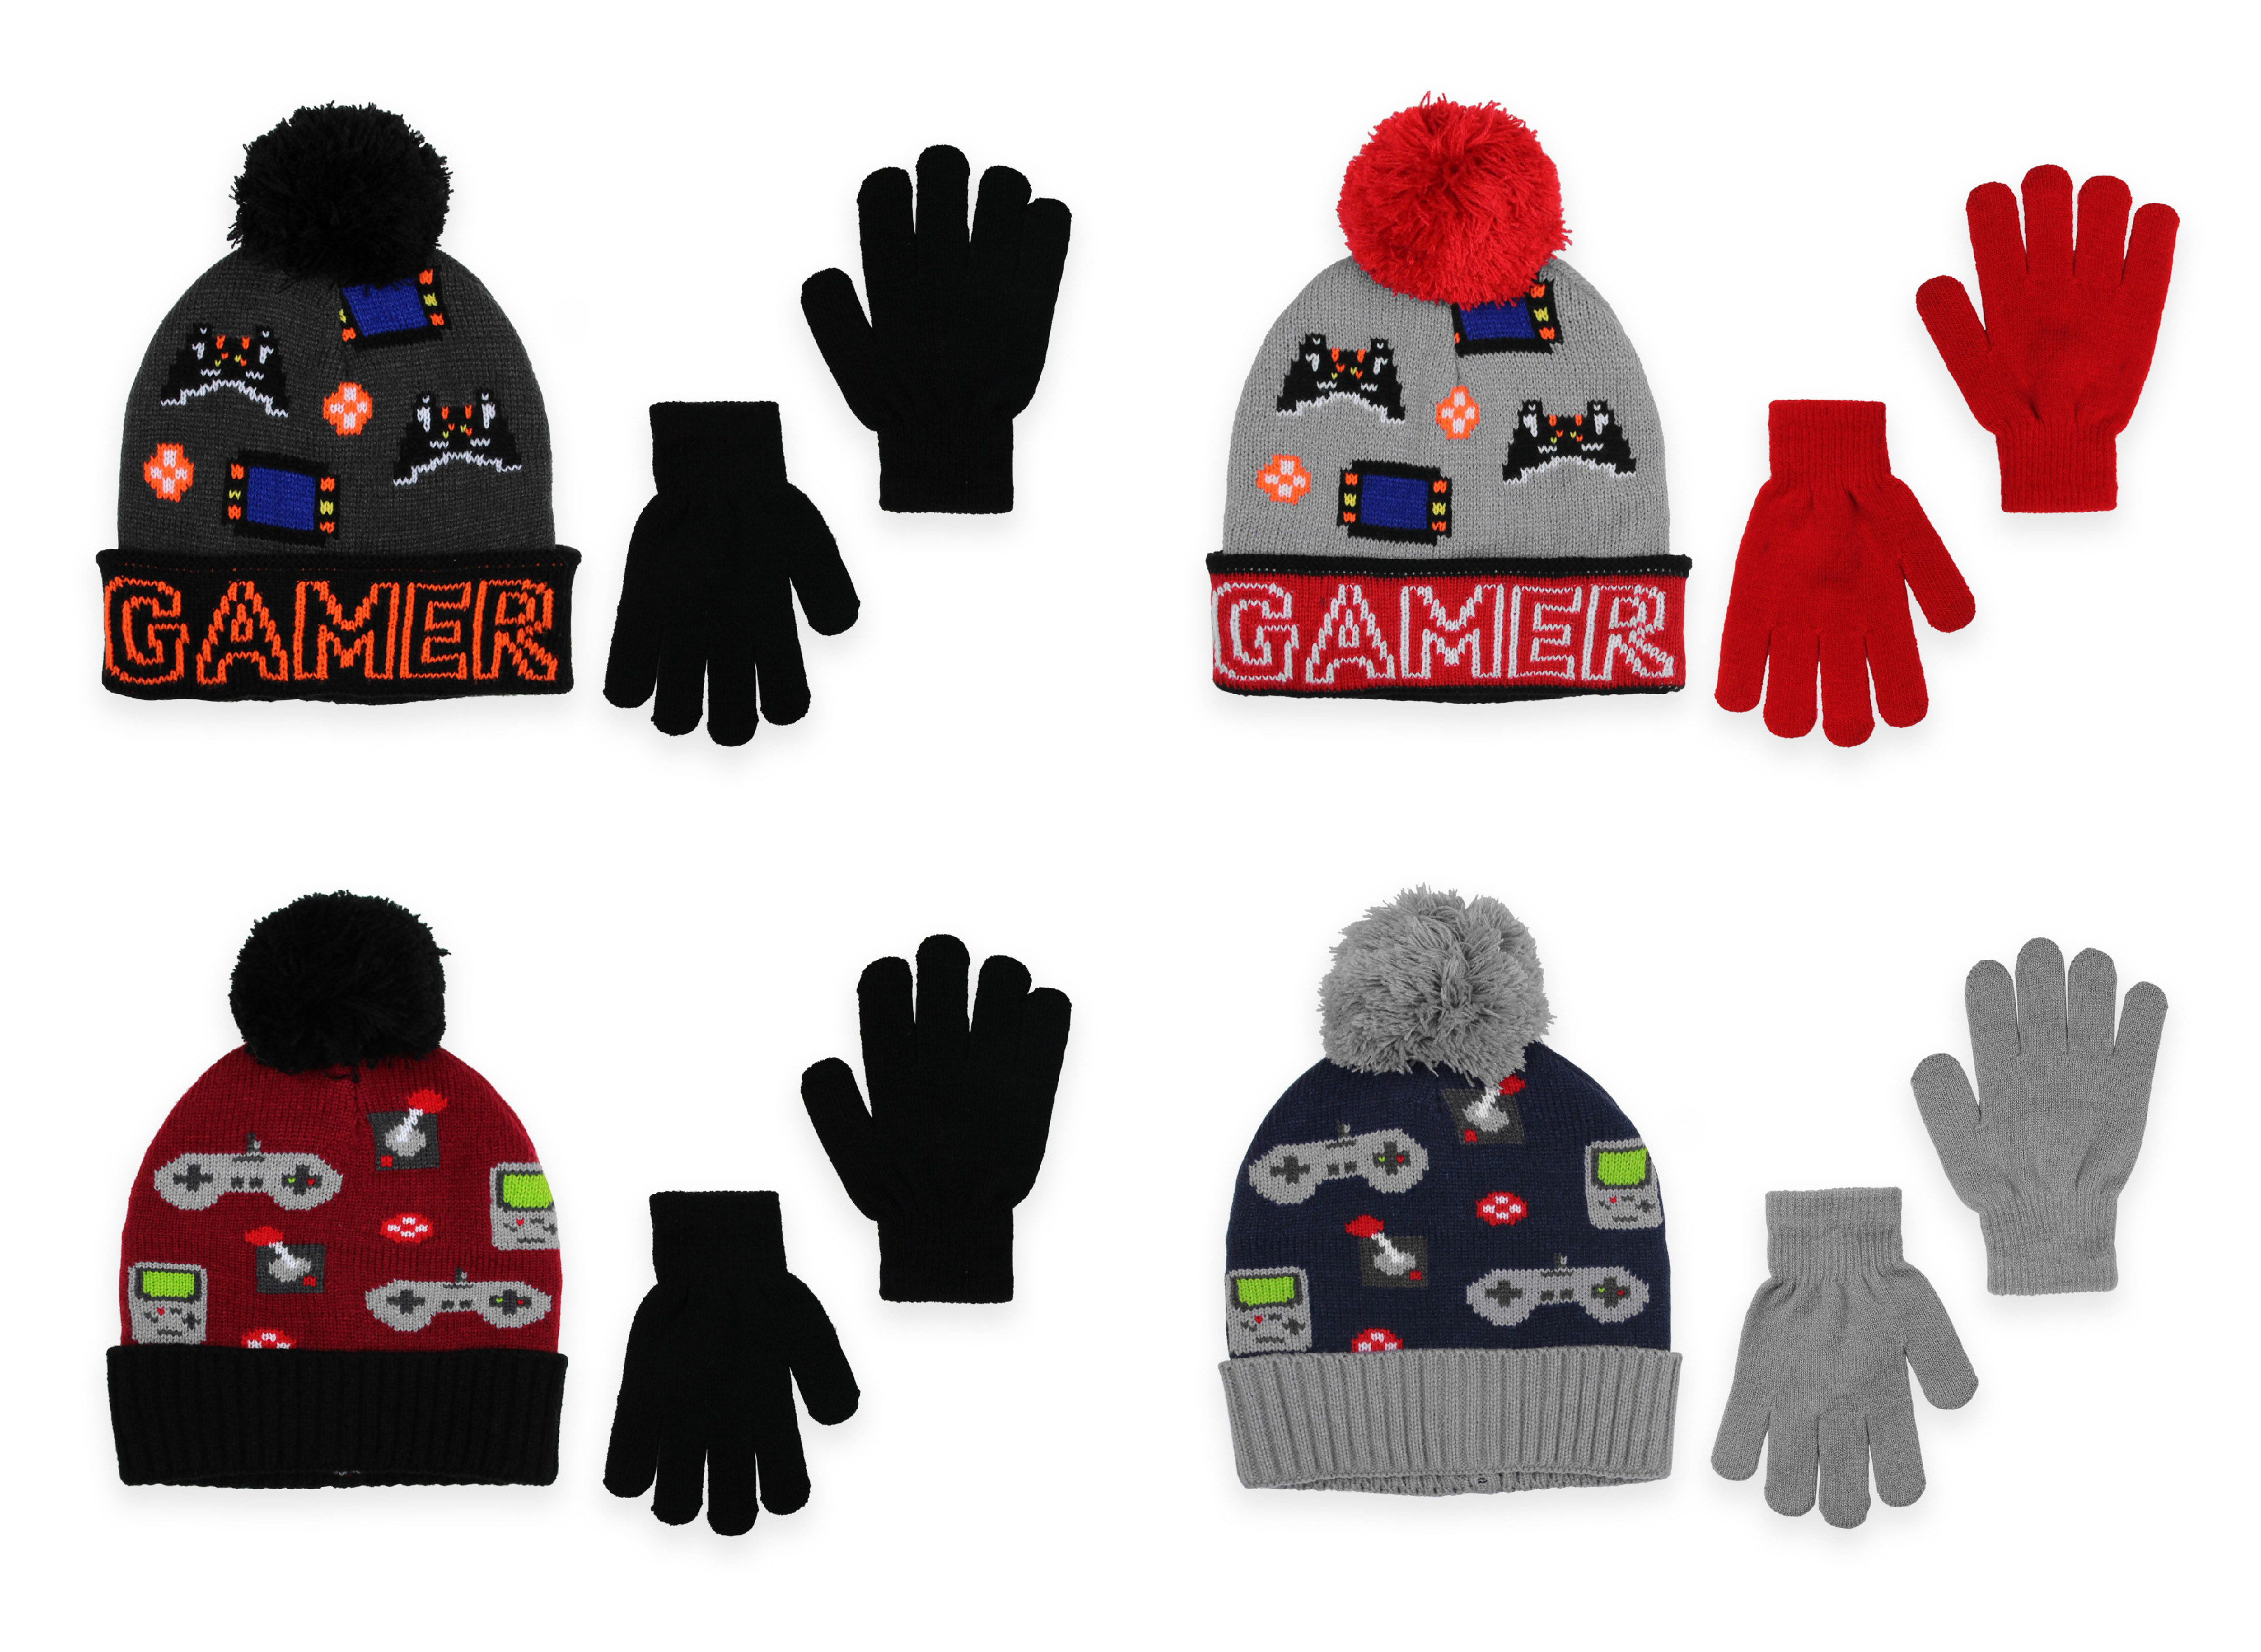 Boy's & Teen's Premium Knit Winter Hats & Gloves Sets w/ Video GAME Print & Pom Poms